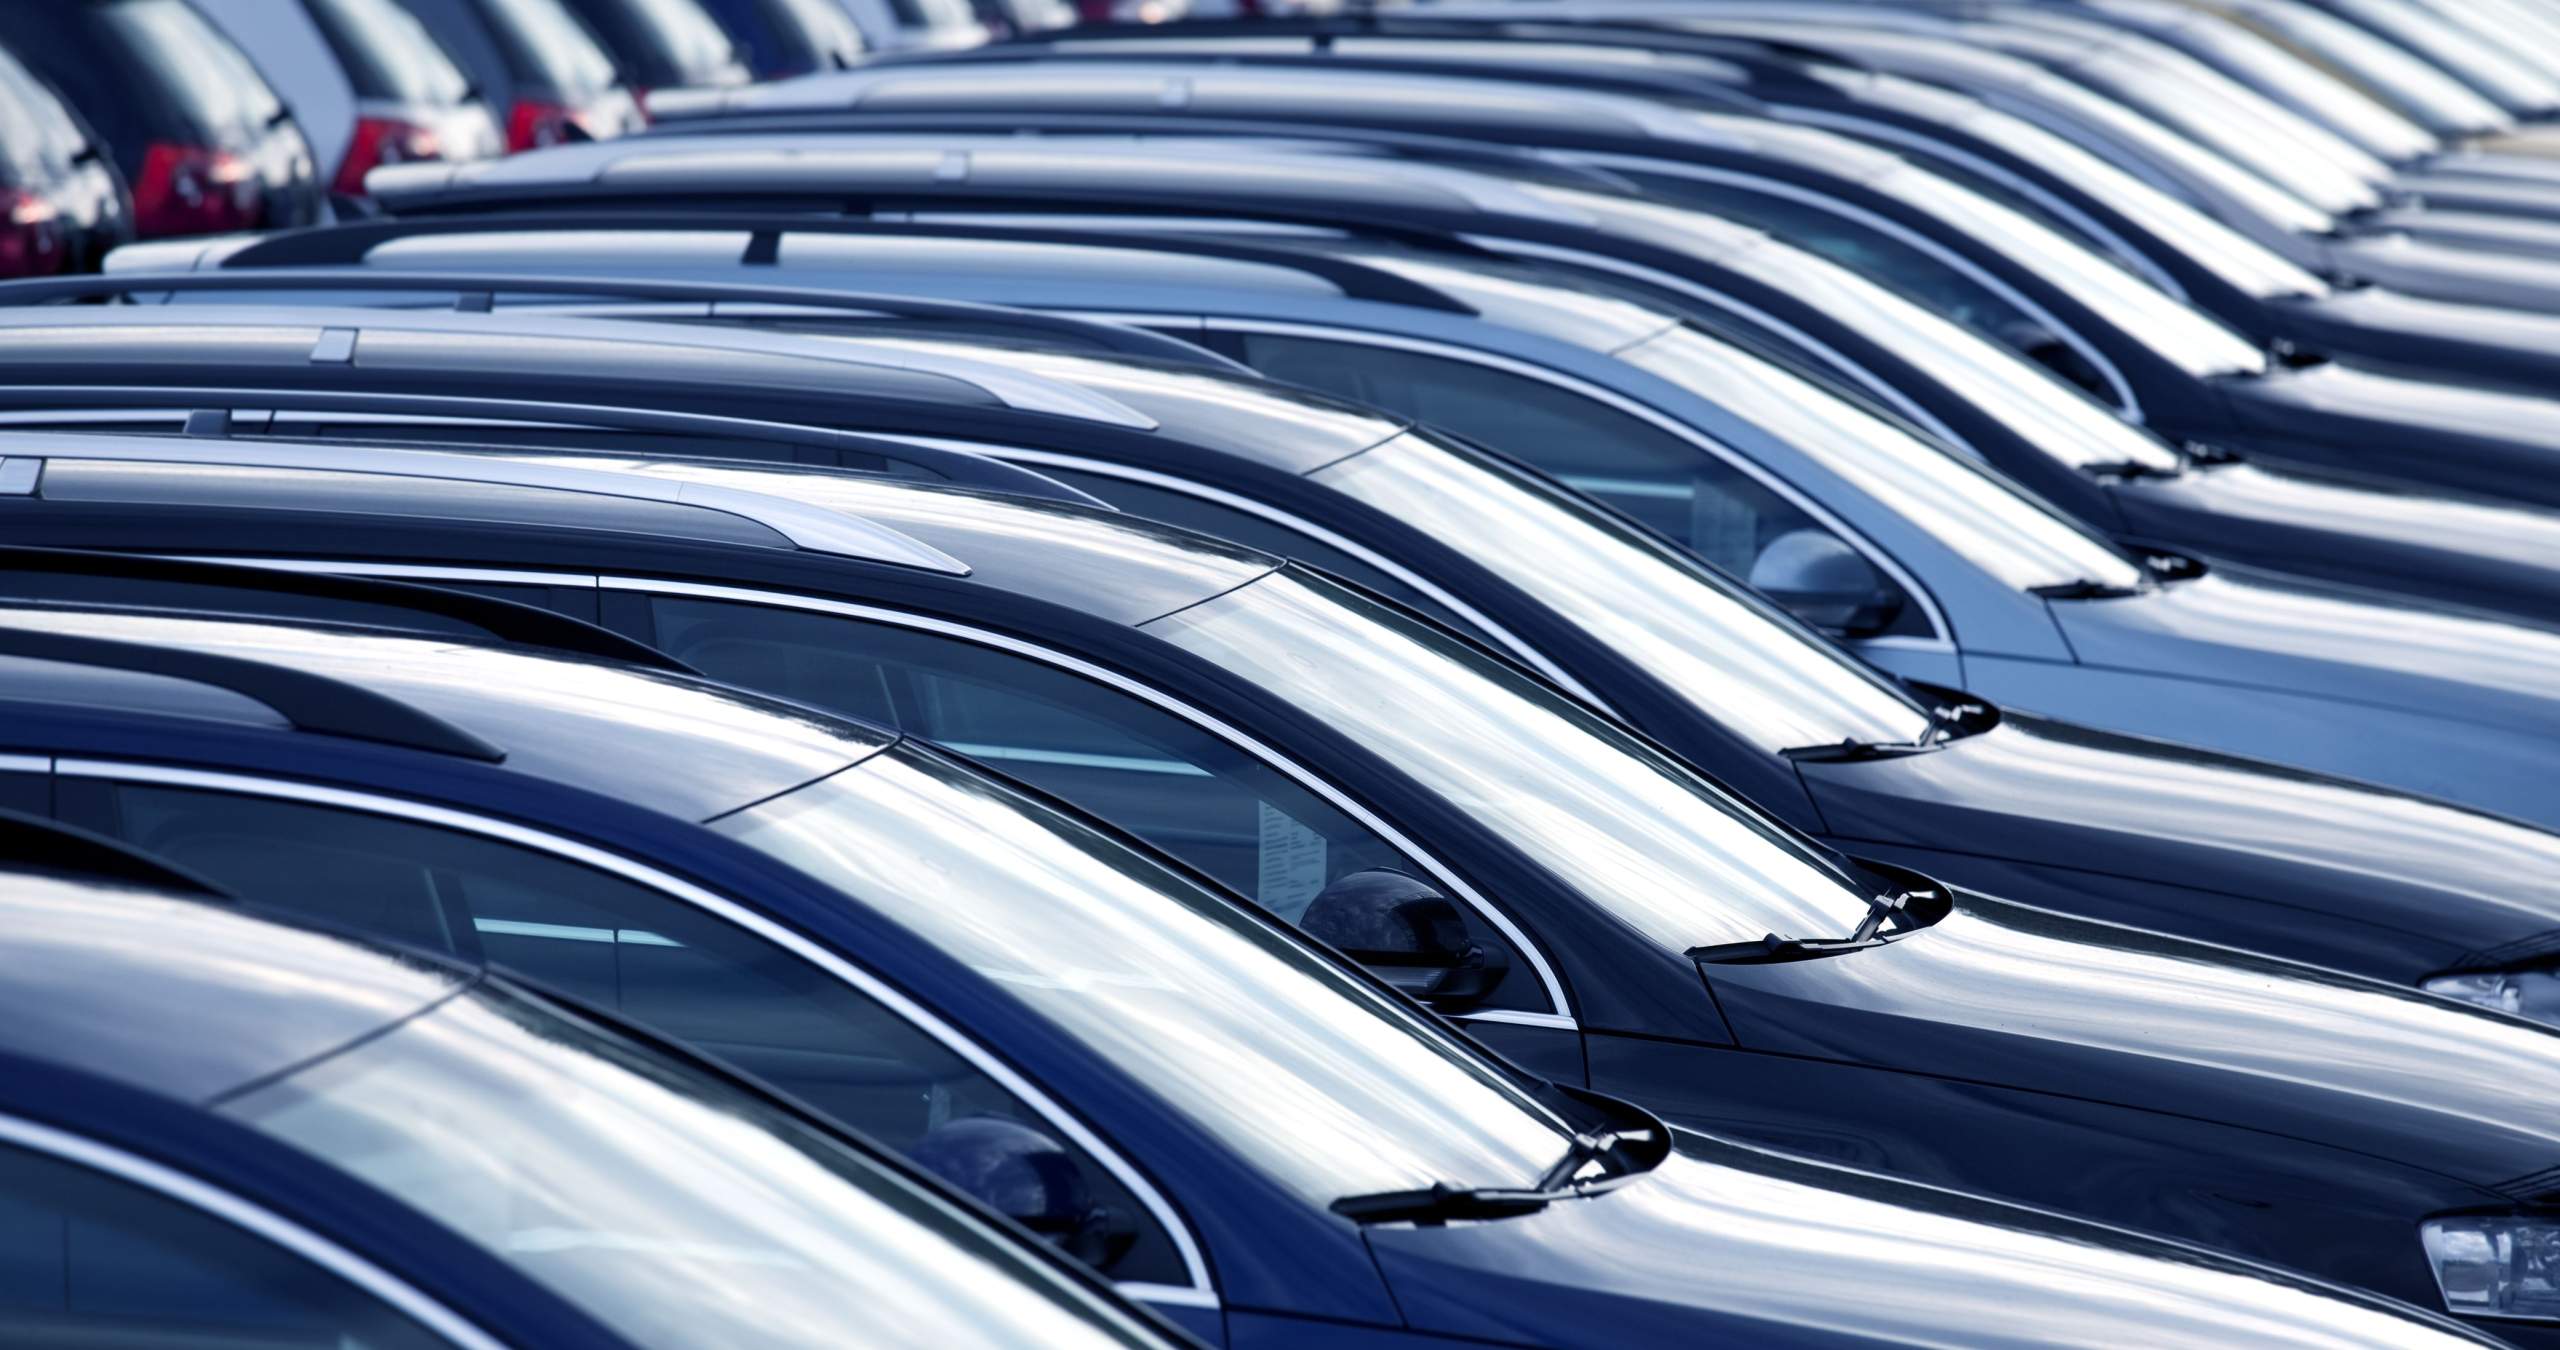 Vehicle sales grow by 21% in Querétaro: AMDA